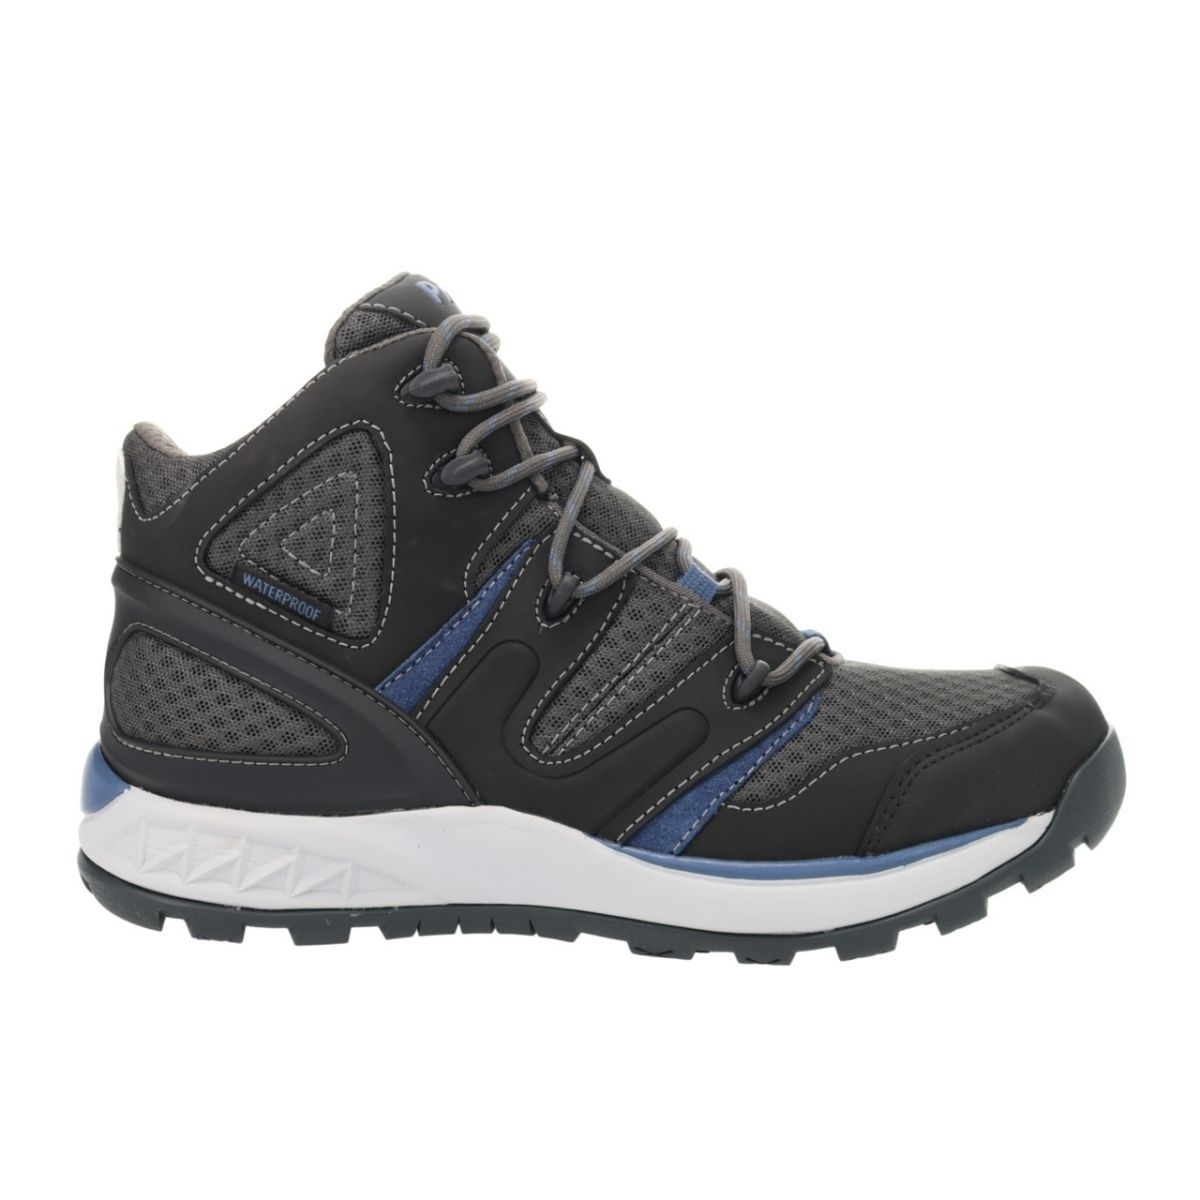 Propet Men's Veymont Waterproof Hiking Boot Grey/Blue - MOA022SGRB GREY/BLUE - GREY/BLUE, 11.5